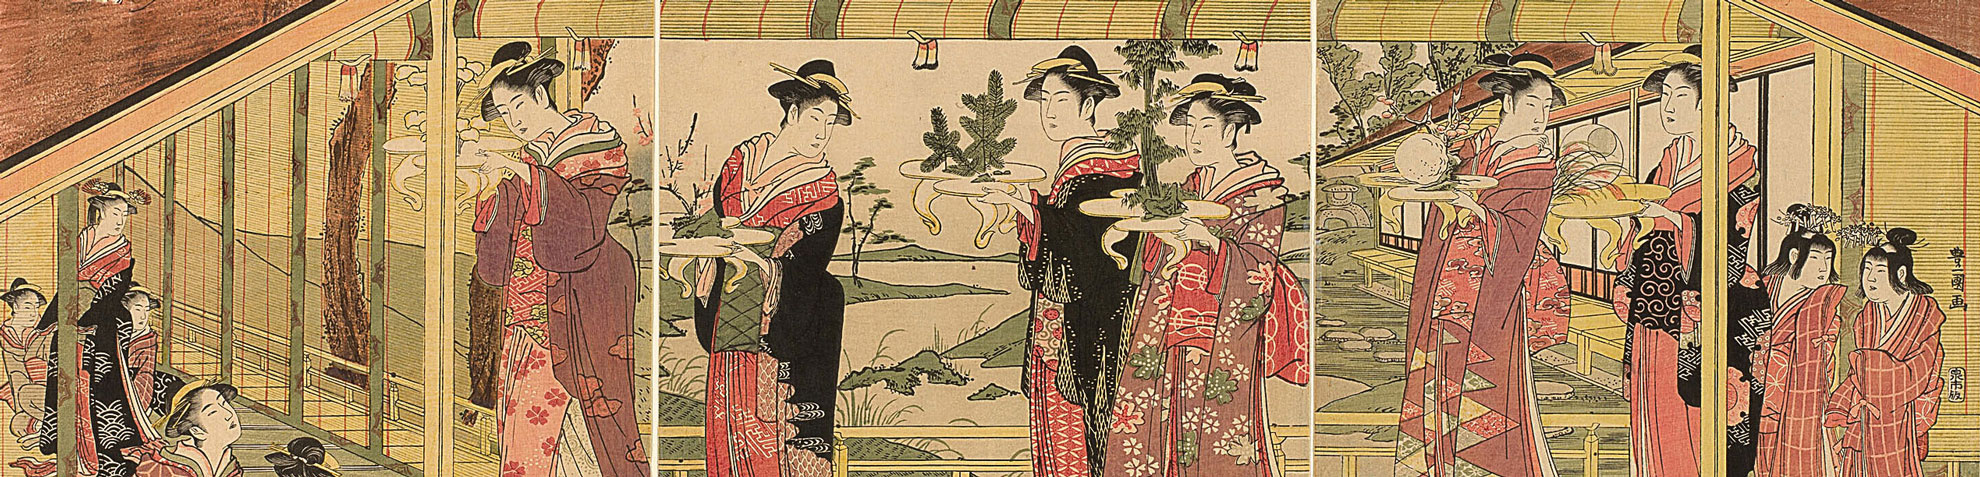 Utagawa Toyokuni I - A procession of women holding shimadai decorations (Detail) - 1784-1806. The Art Institute of Chicago.